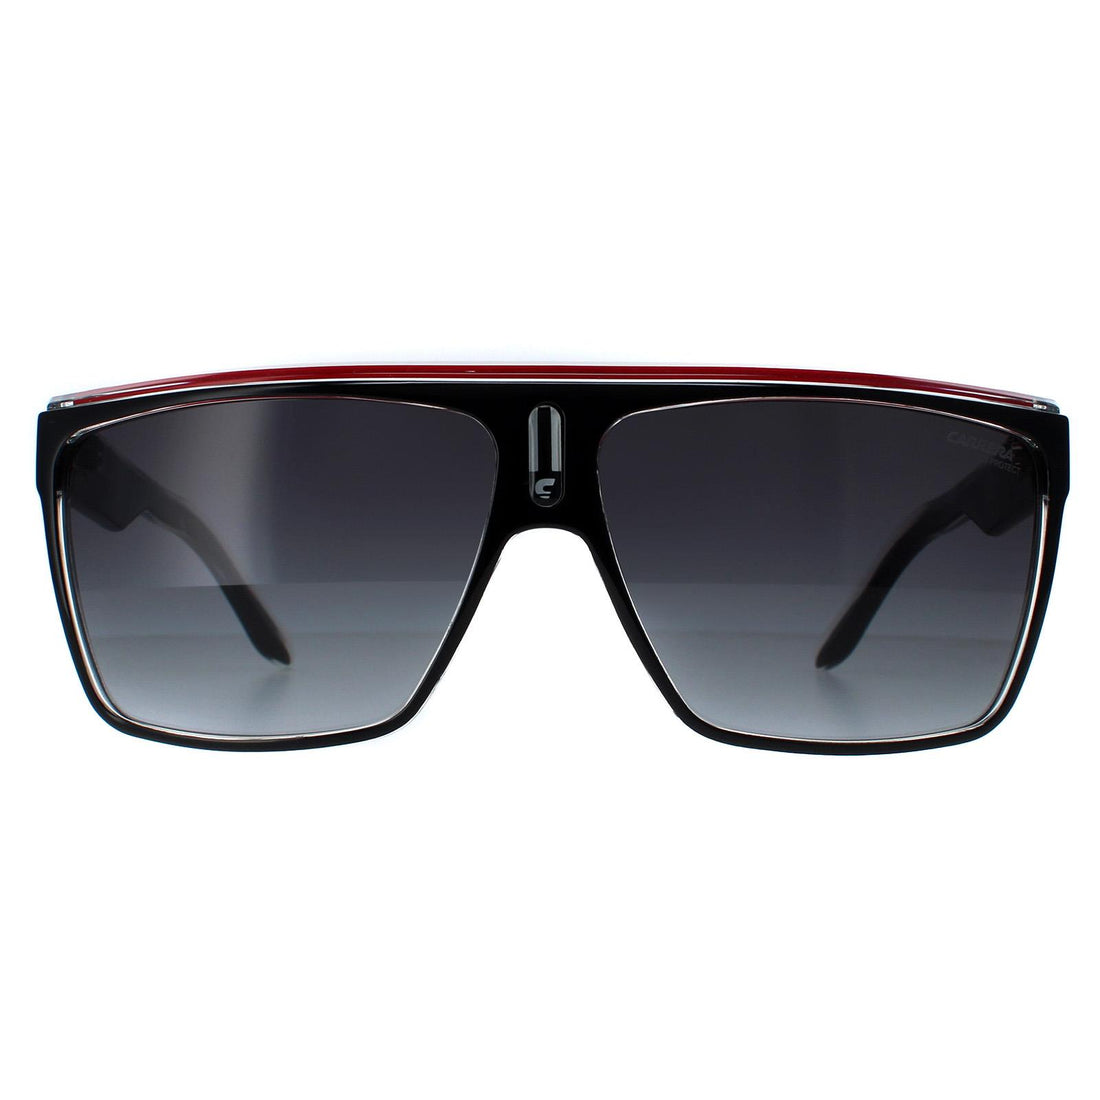 Carrera Carrera 22 Sunglasses Black Red Gold / Dark Grey Gradient